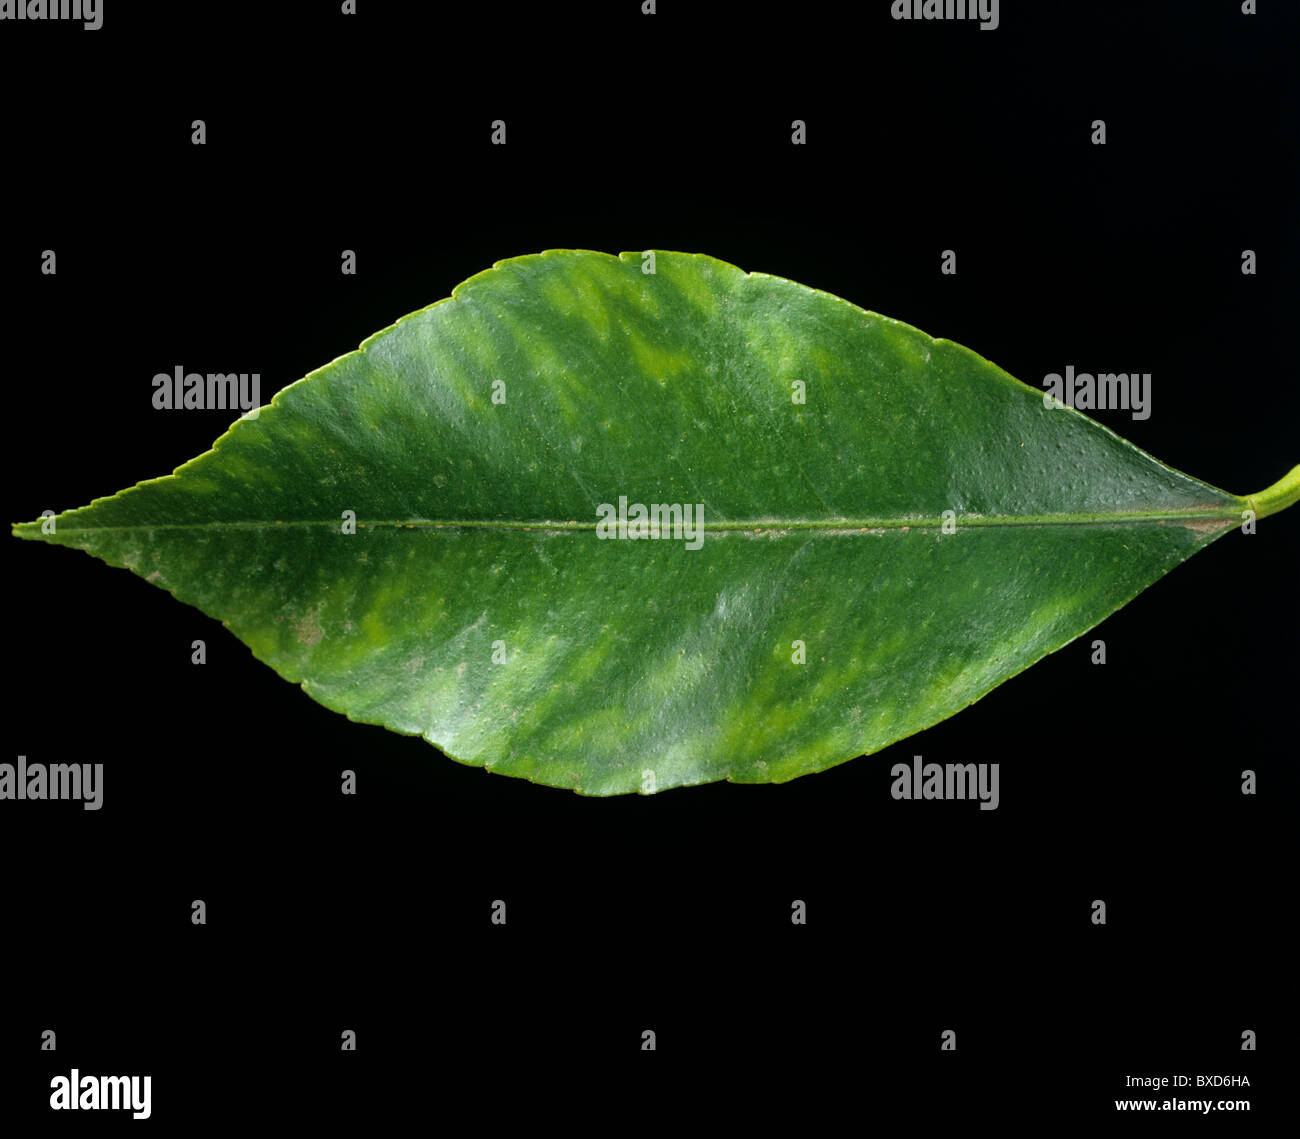 Lemon leaf showing symptoms of manganese deficiency Stock Photo